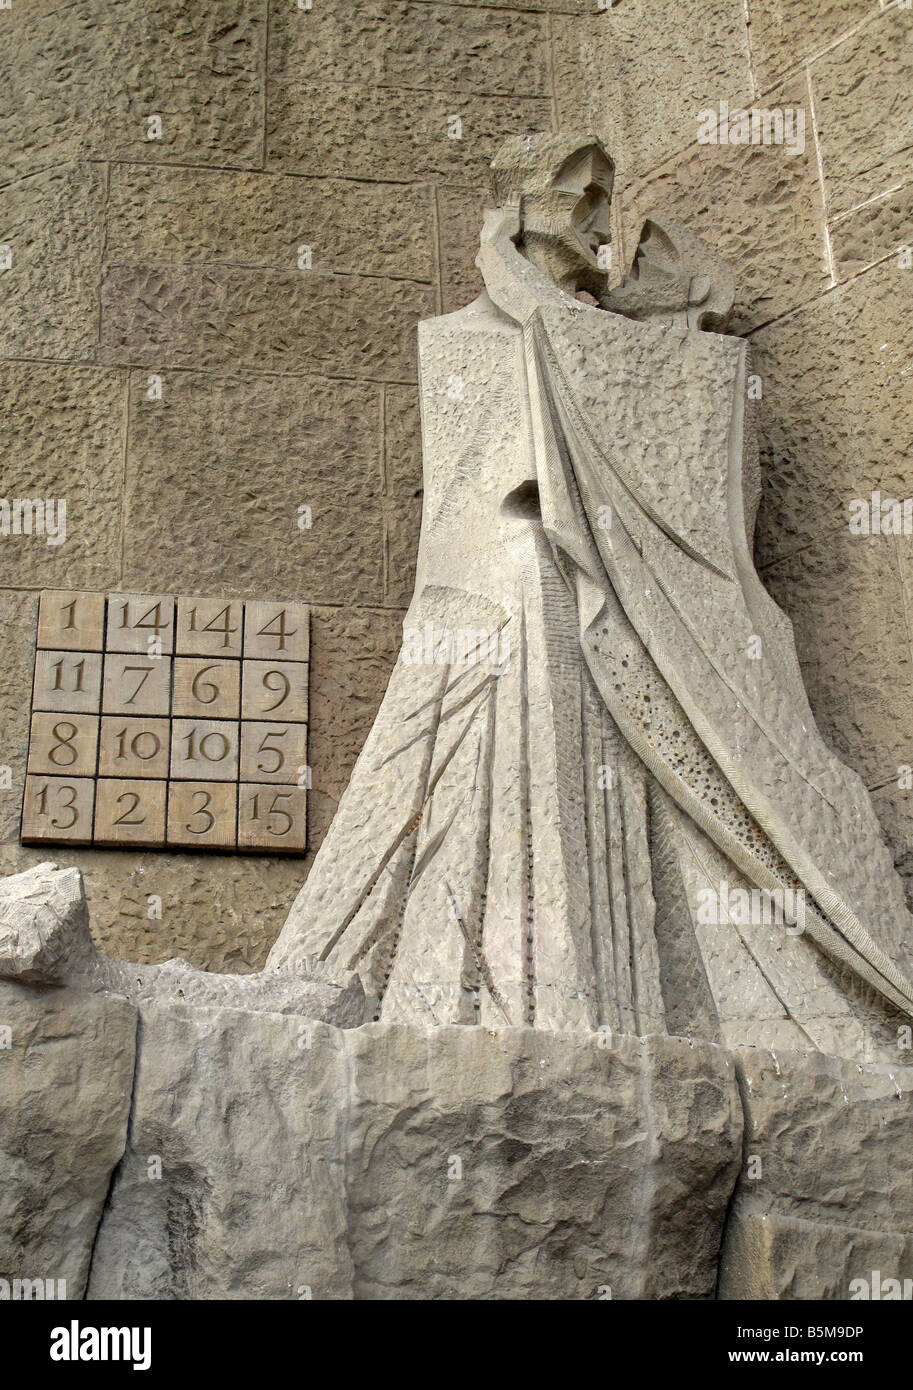 Judas' kiss of betrayal and cryptogram code square on Main entrance of Gaudi's La Sagrada Familia cathedral Barcelona, Spain Stock Photo